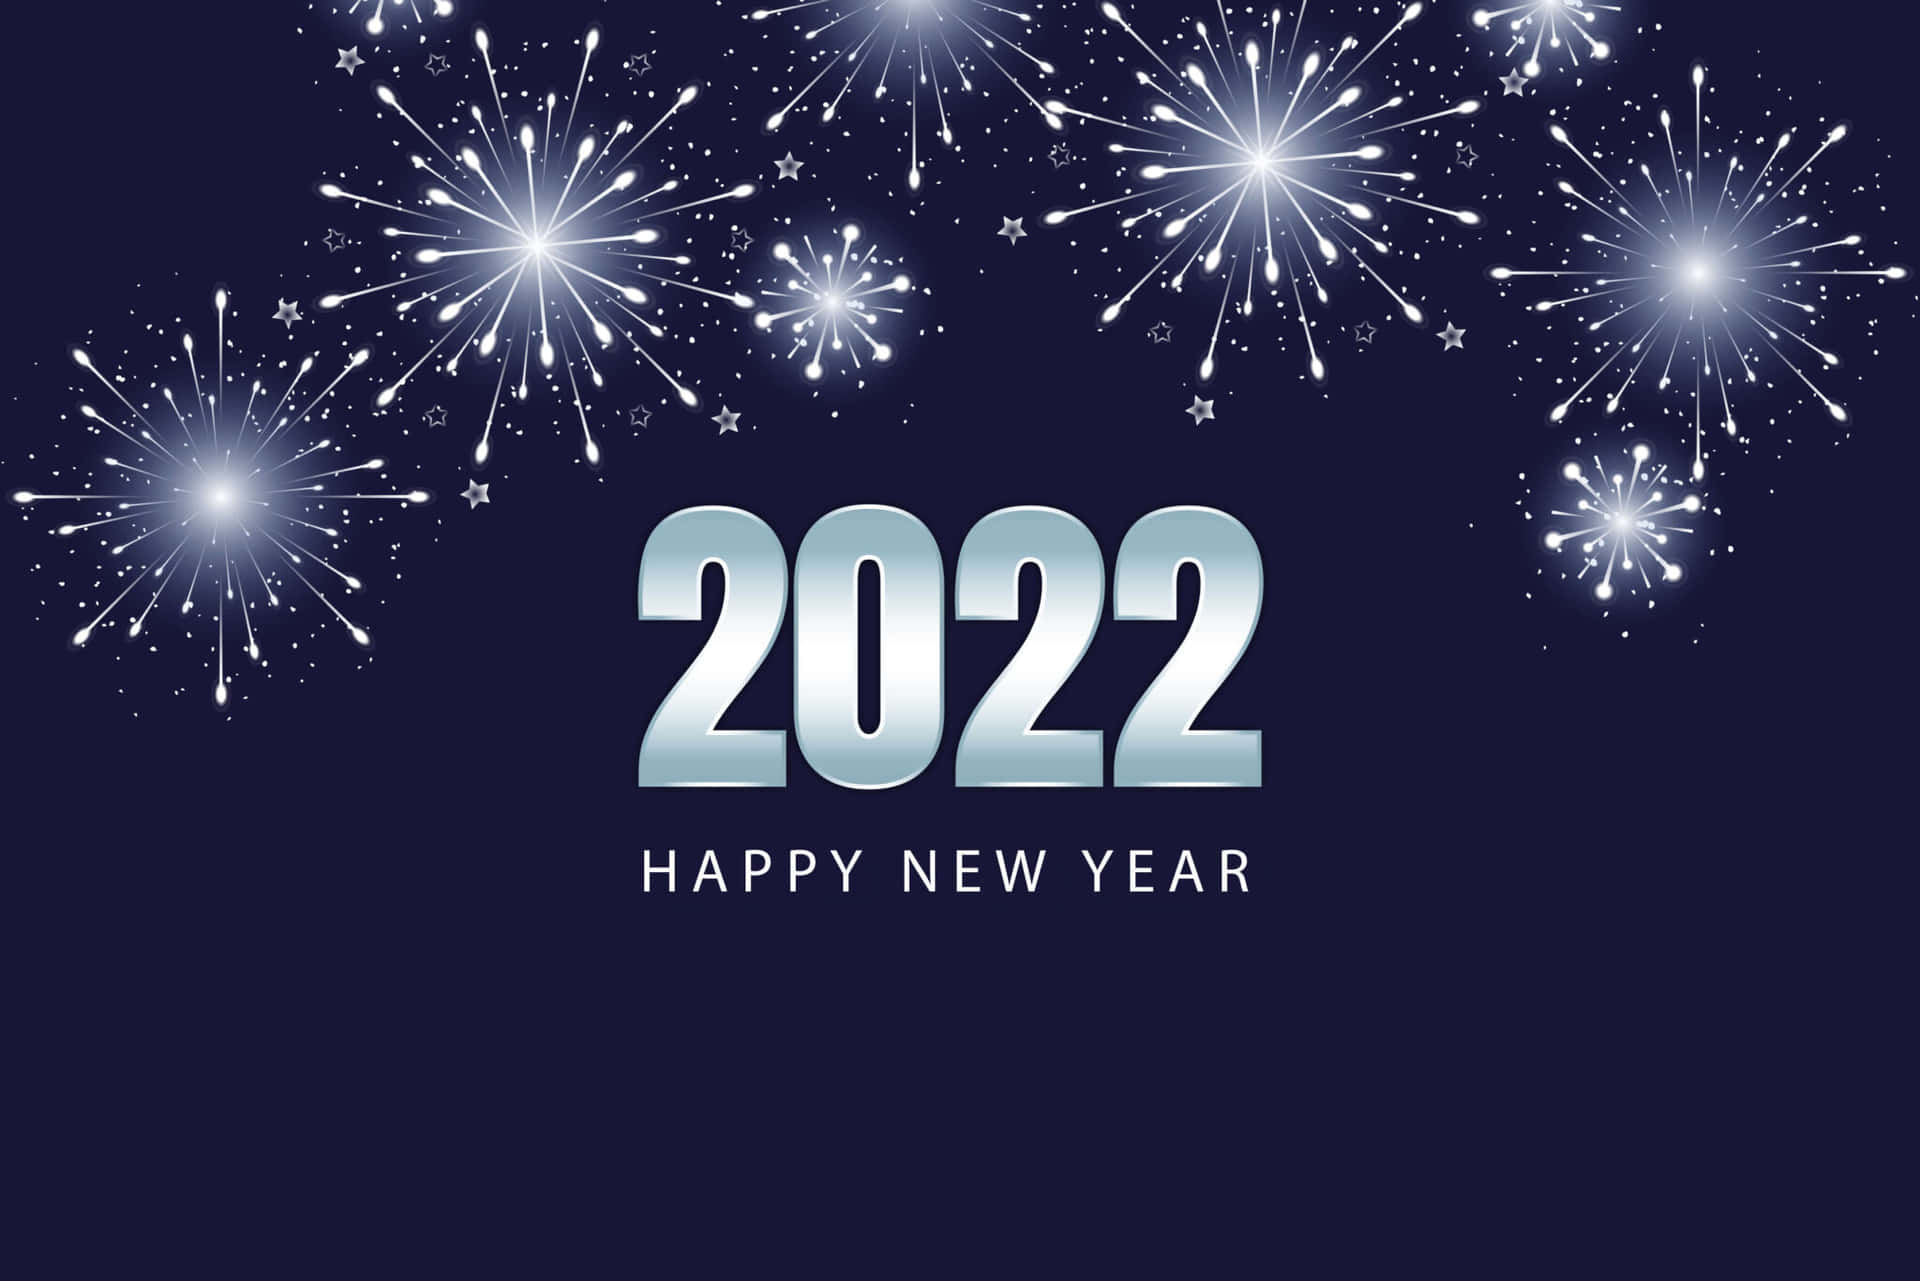 Feliceanno Nuovo 2020 Con Fuochi D'artificio Su Uno Sfondo Scuro.